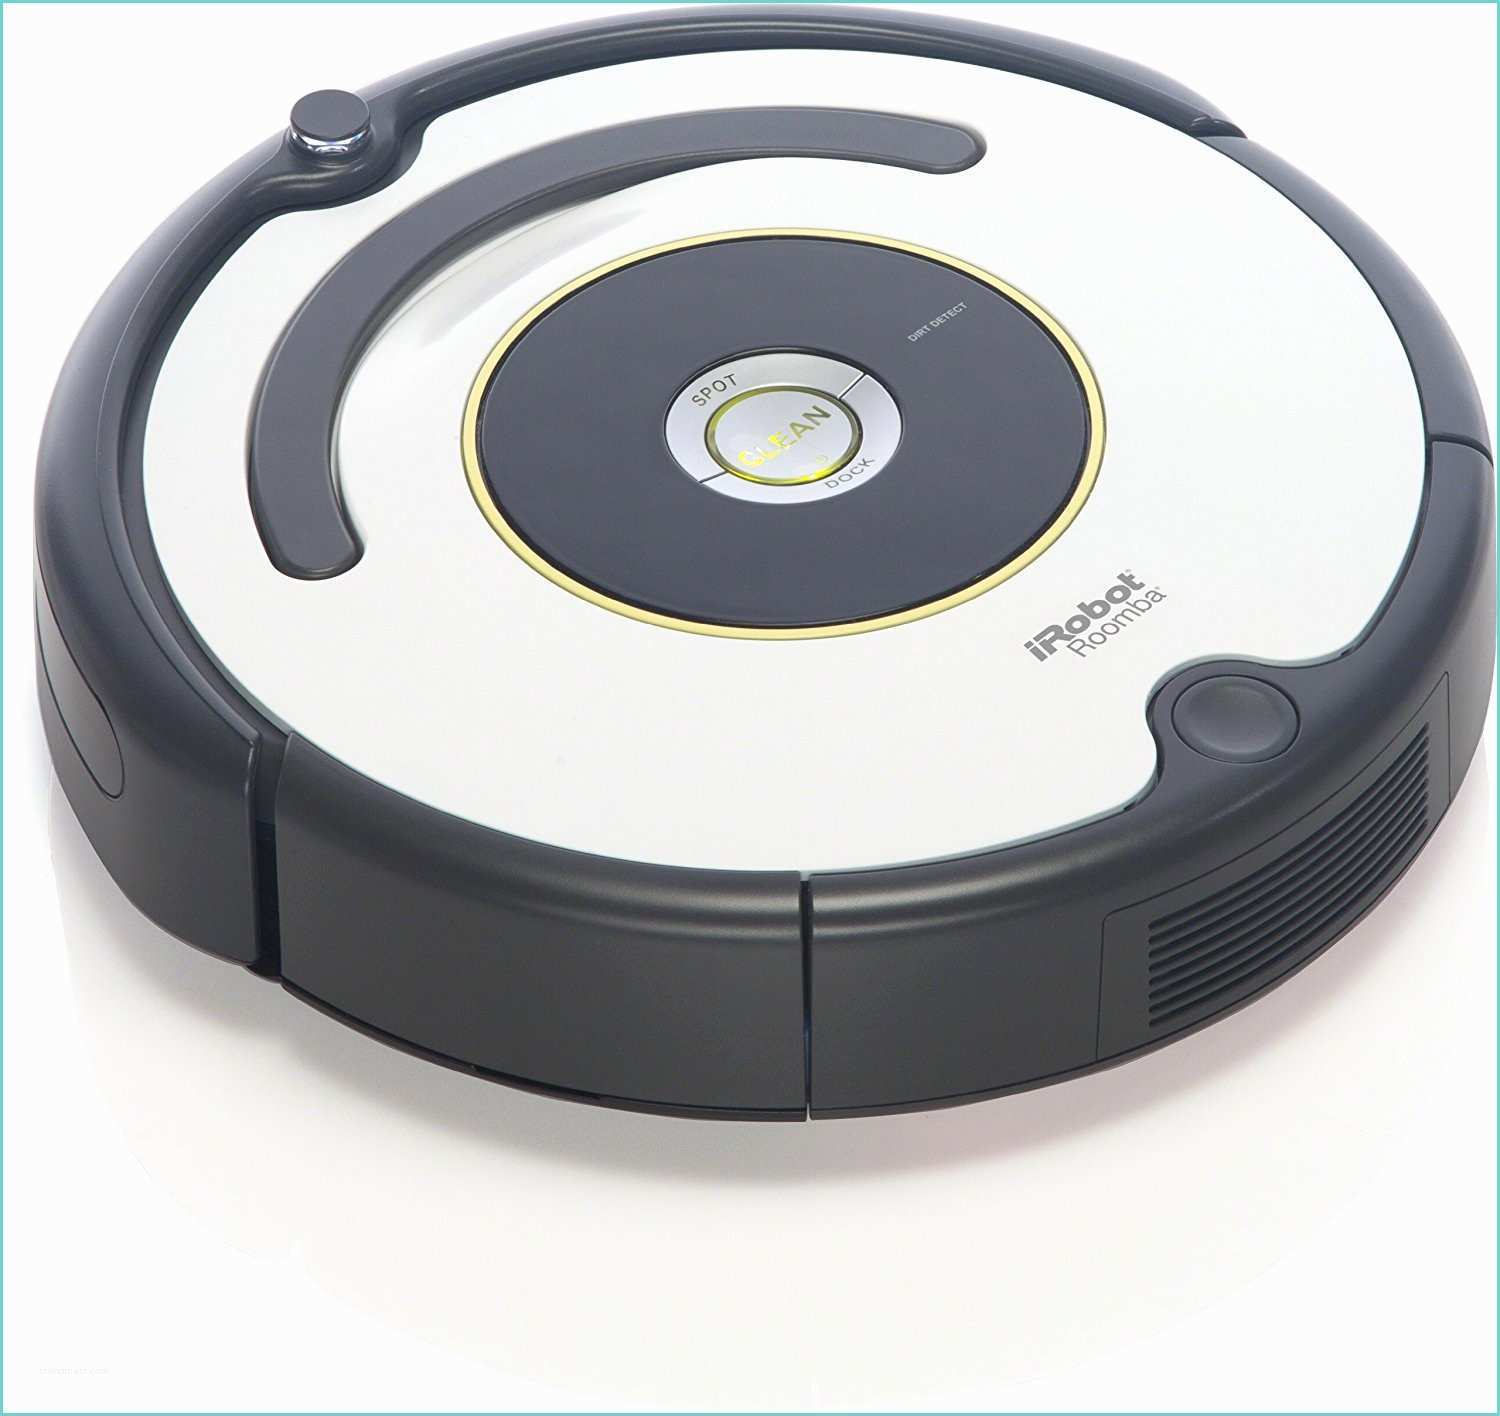 Irobot 871 Avis Irobot Roomba 620 Test & Avis aspirateur Robot Suffisant